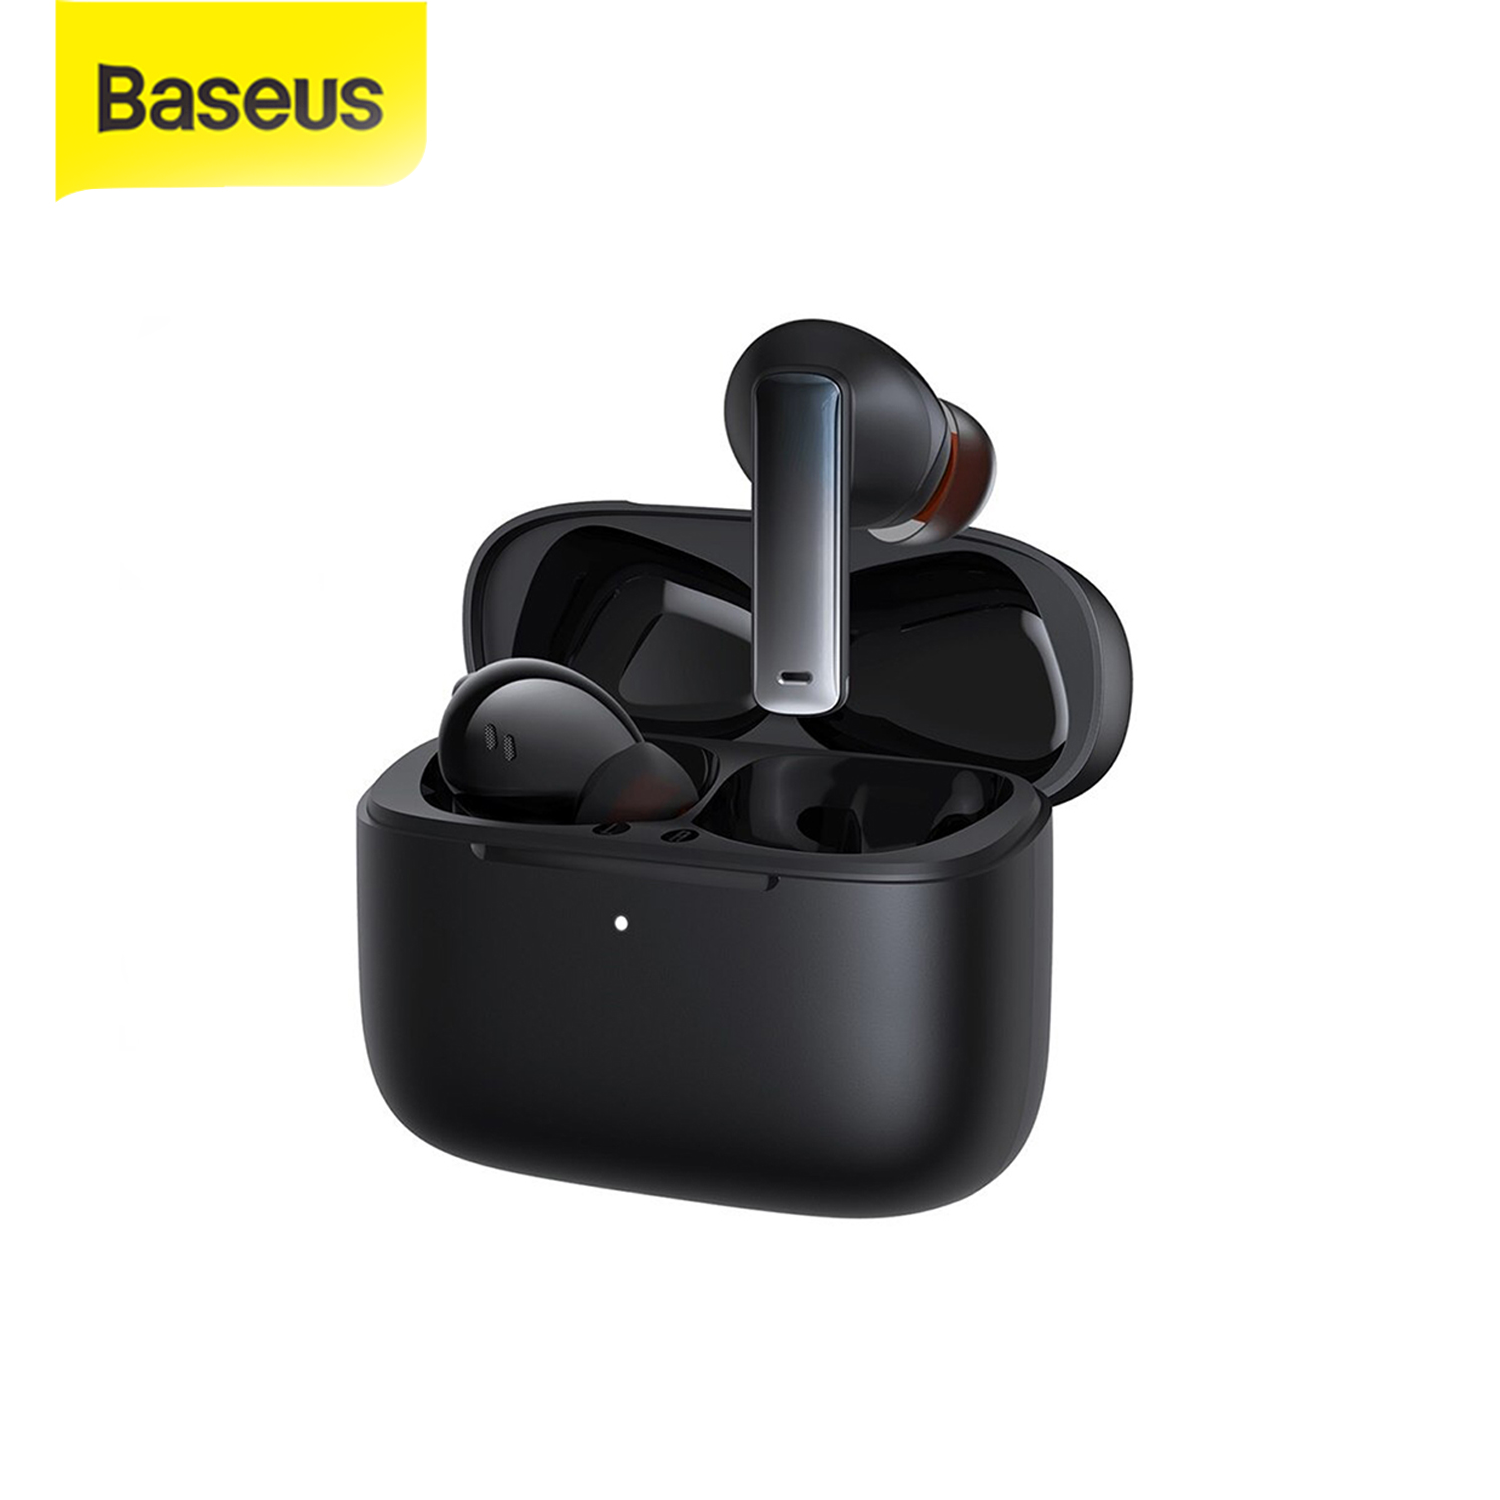 Baseus WM02 Plus TWS Headset Bluetooth Earphone Mini Earbuds Handsfree –  Baseus Indonesia